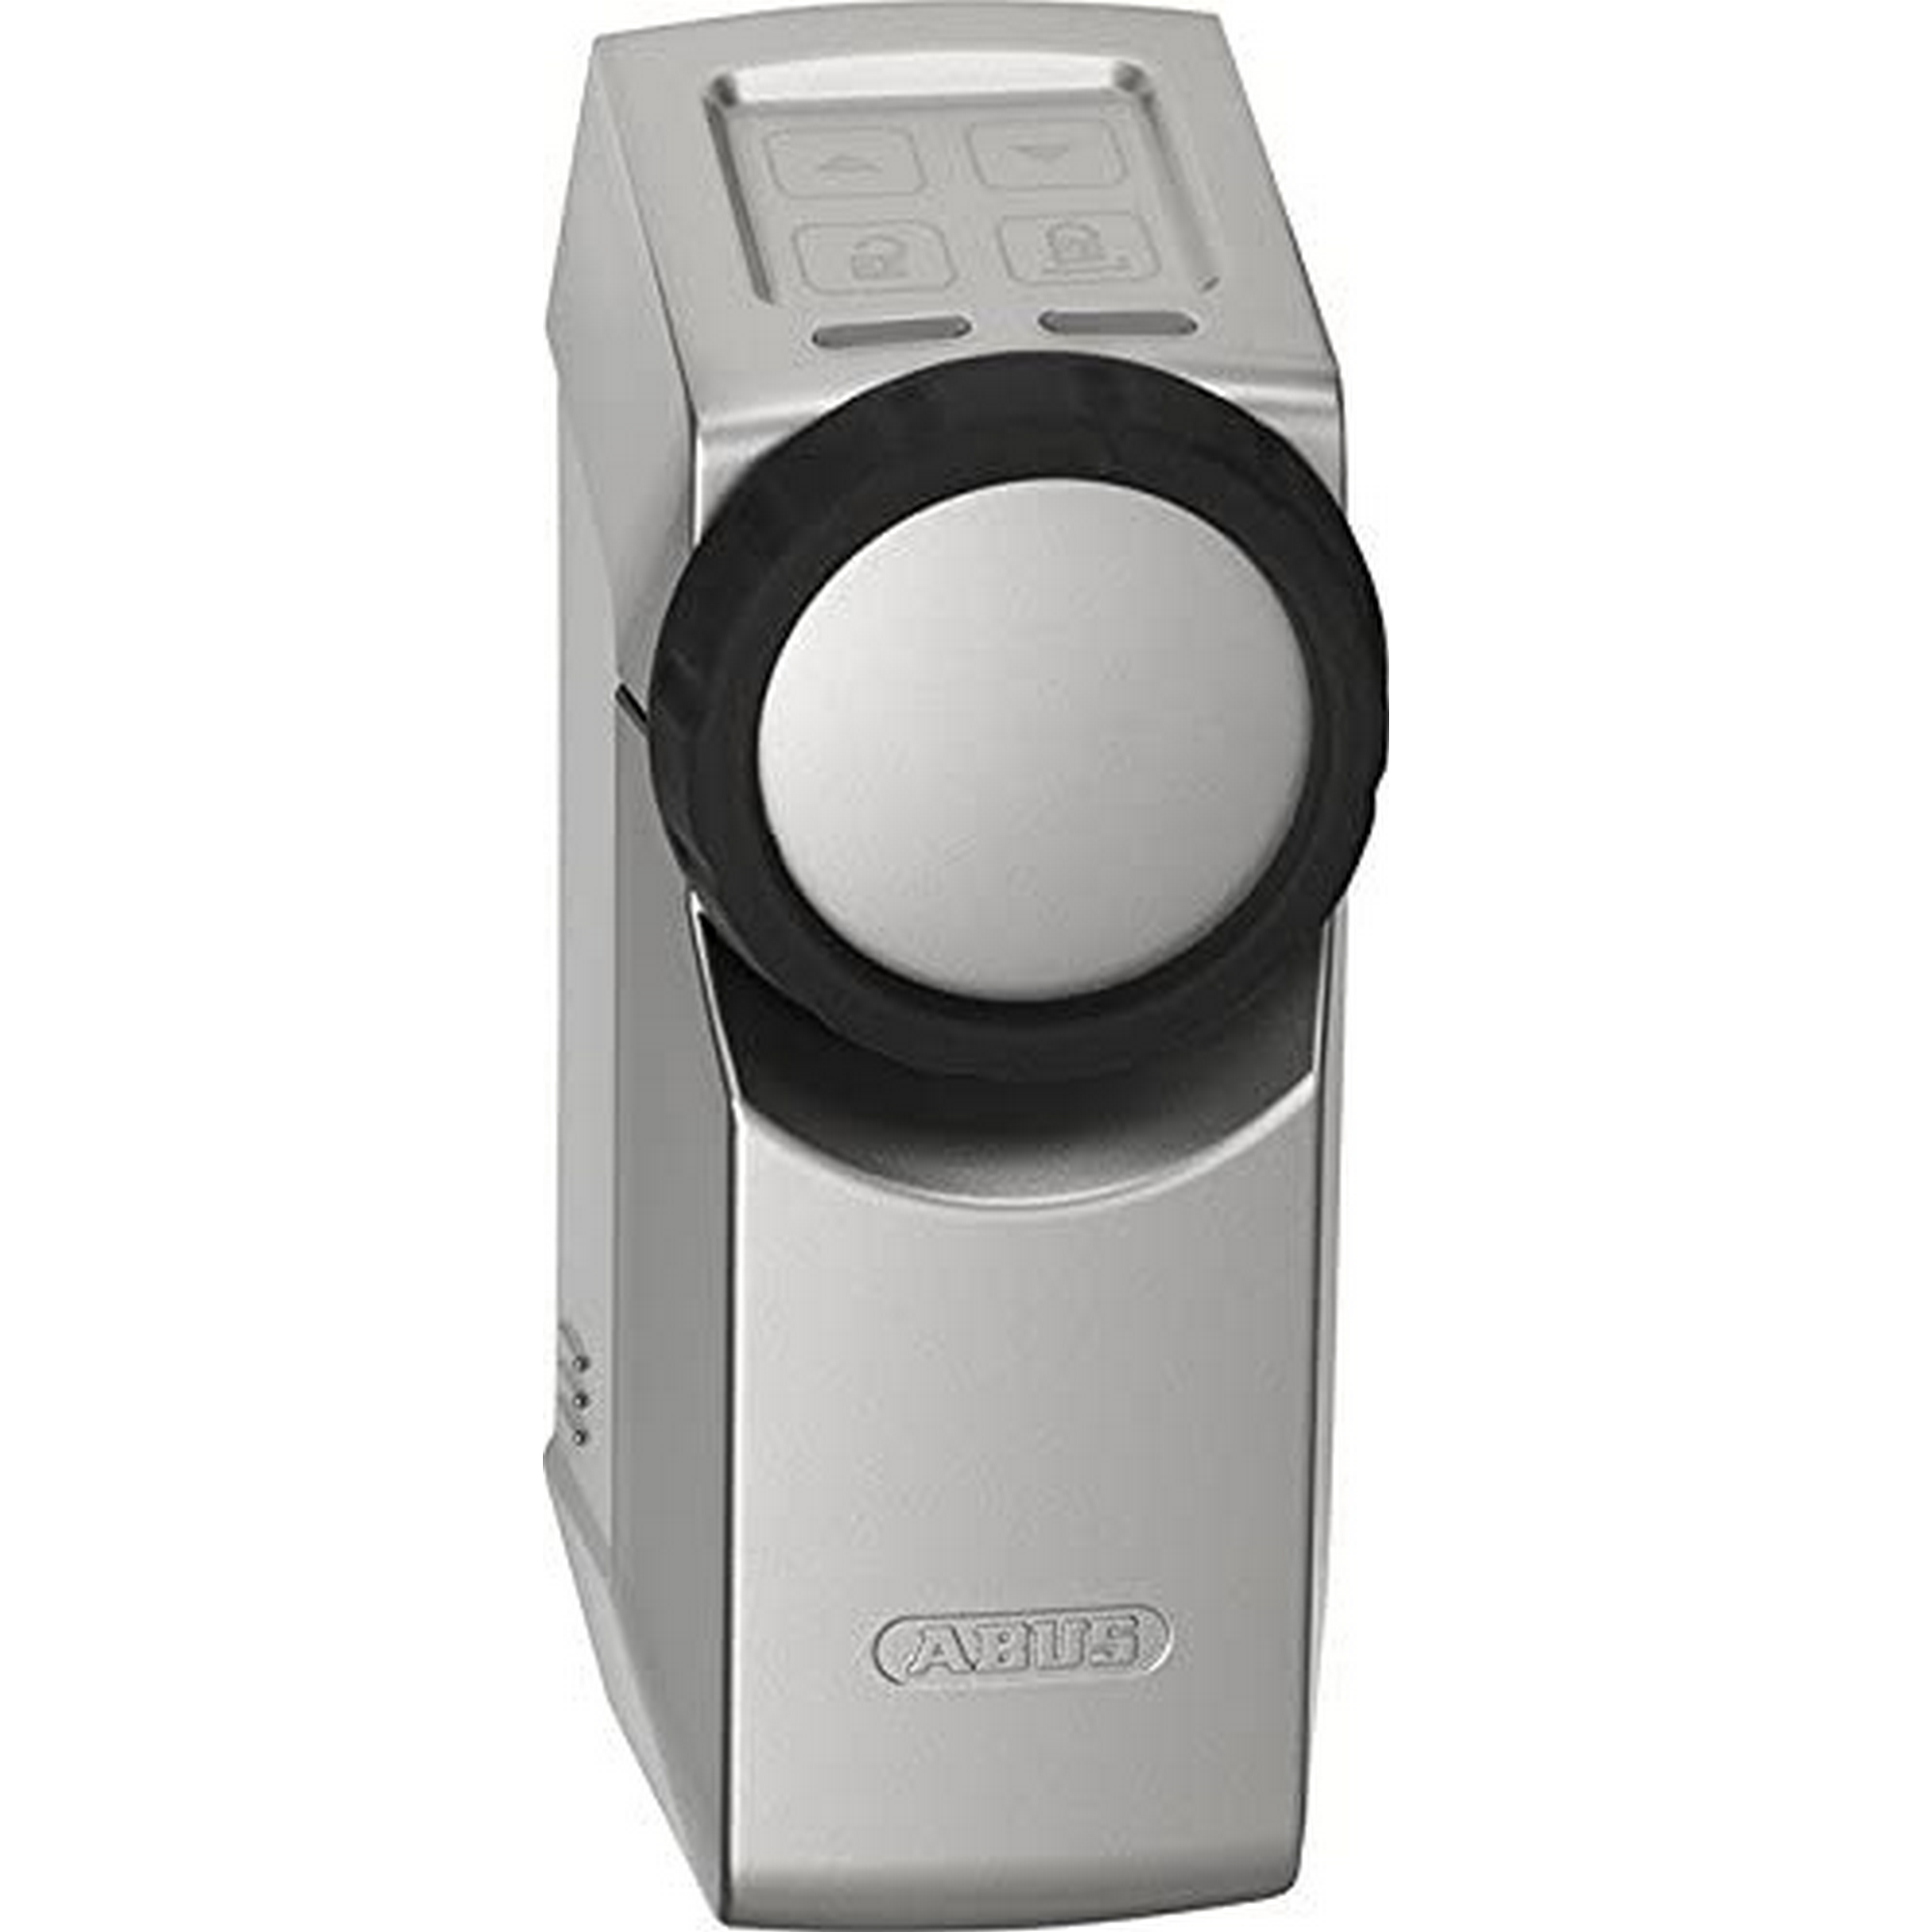 Türschlossantrieb 'CFA3100' HomeTec Pro Bluetooth + product picture